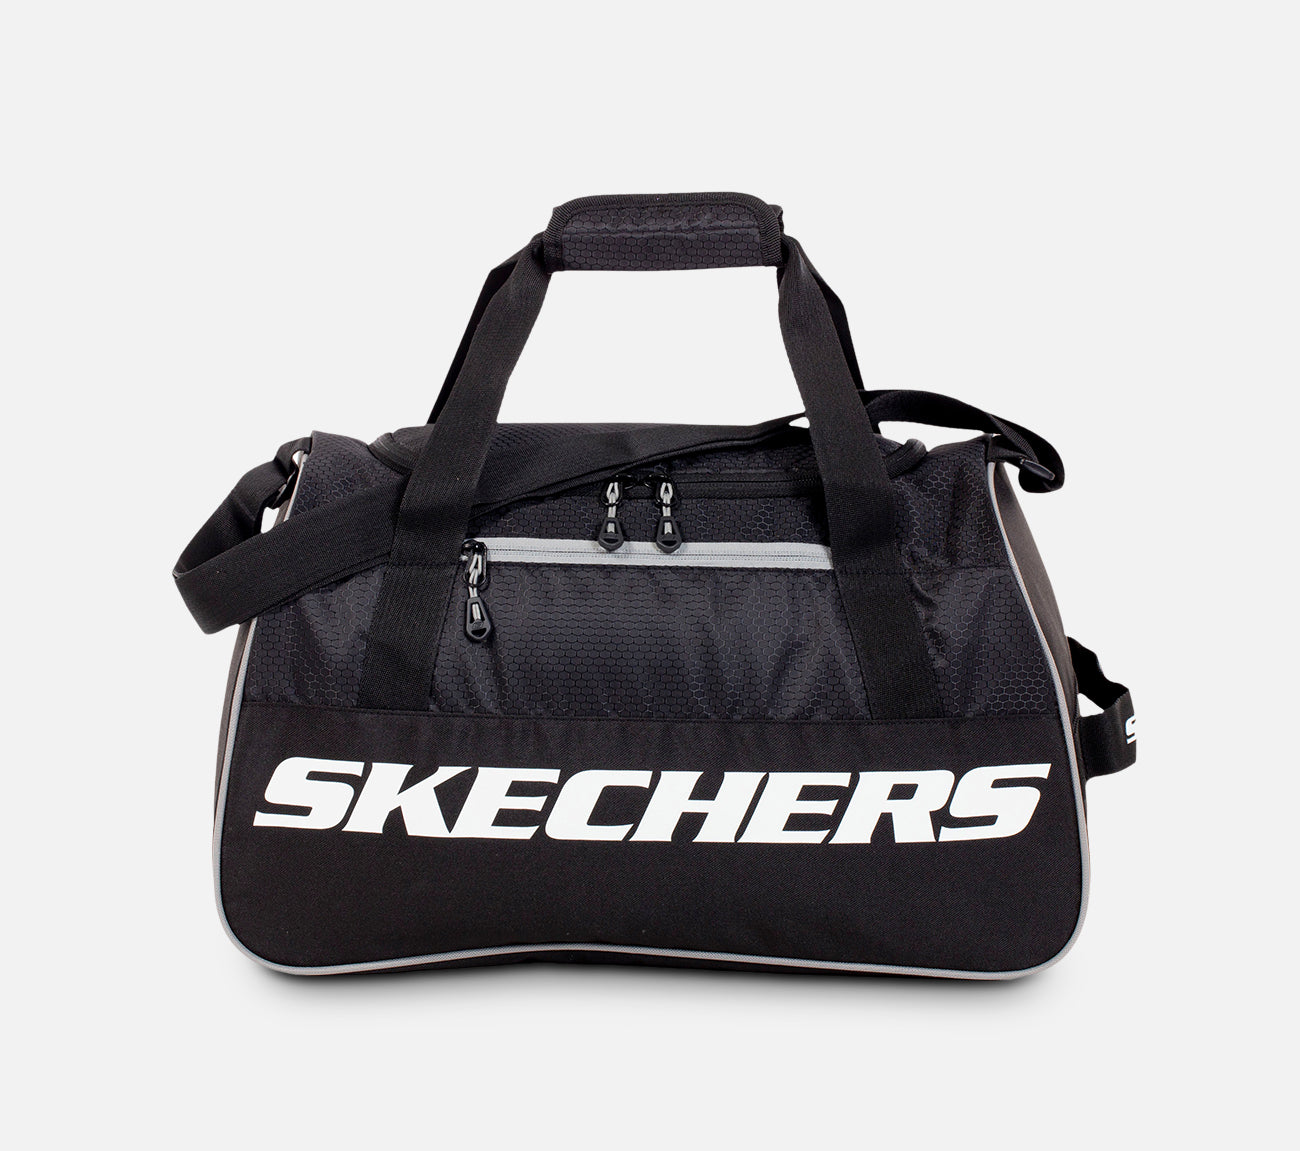 Skechers Duffelbag Bags Skechers